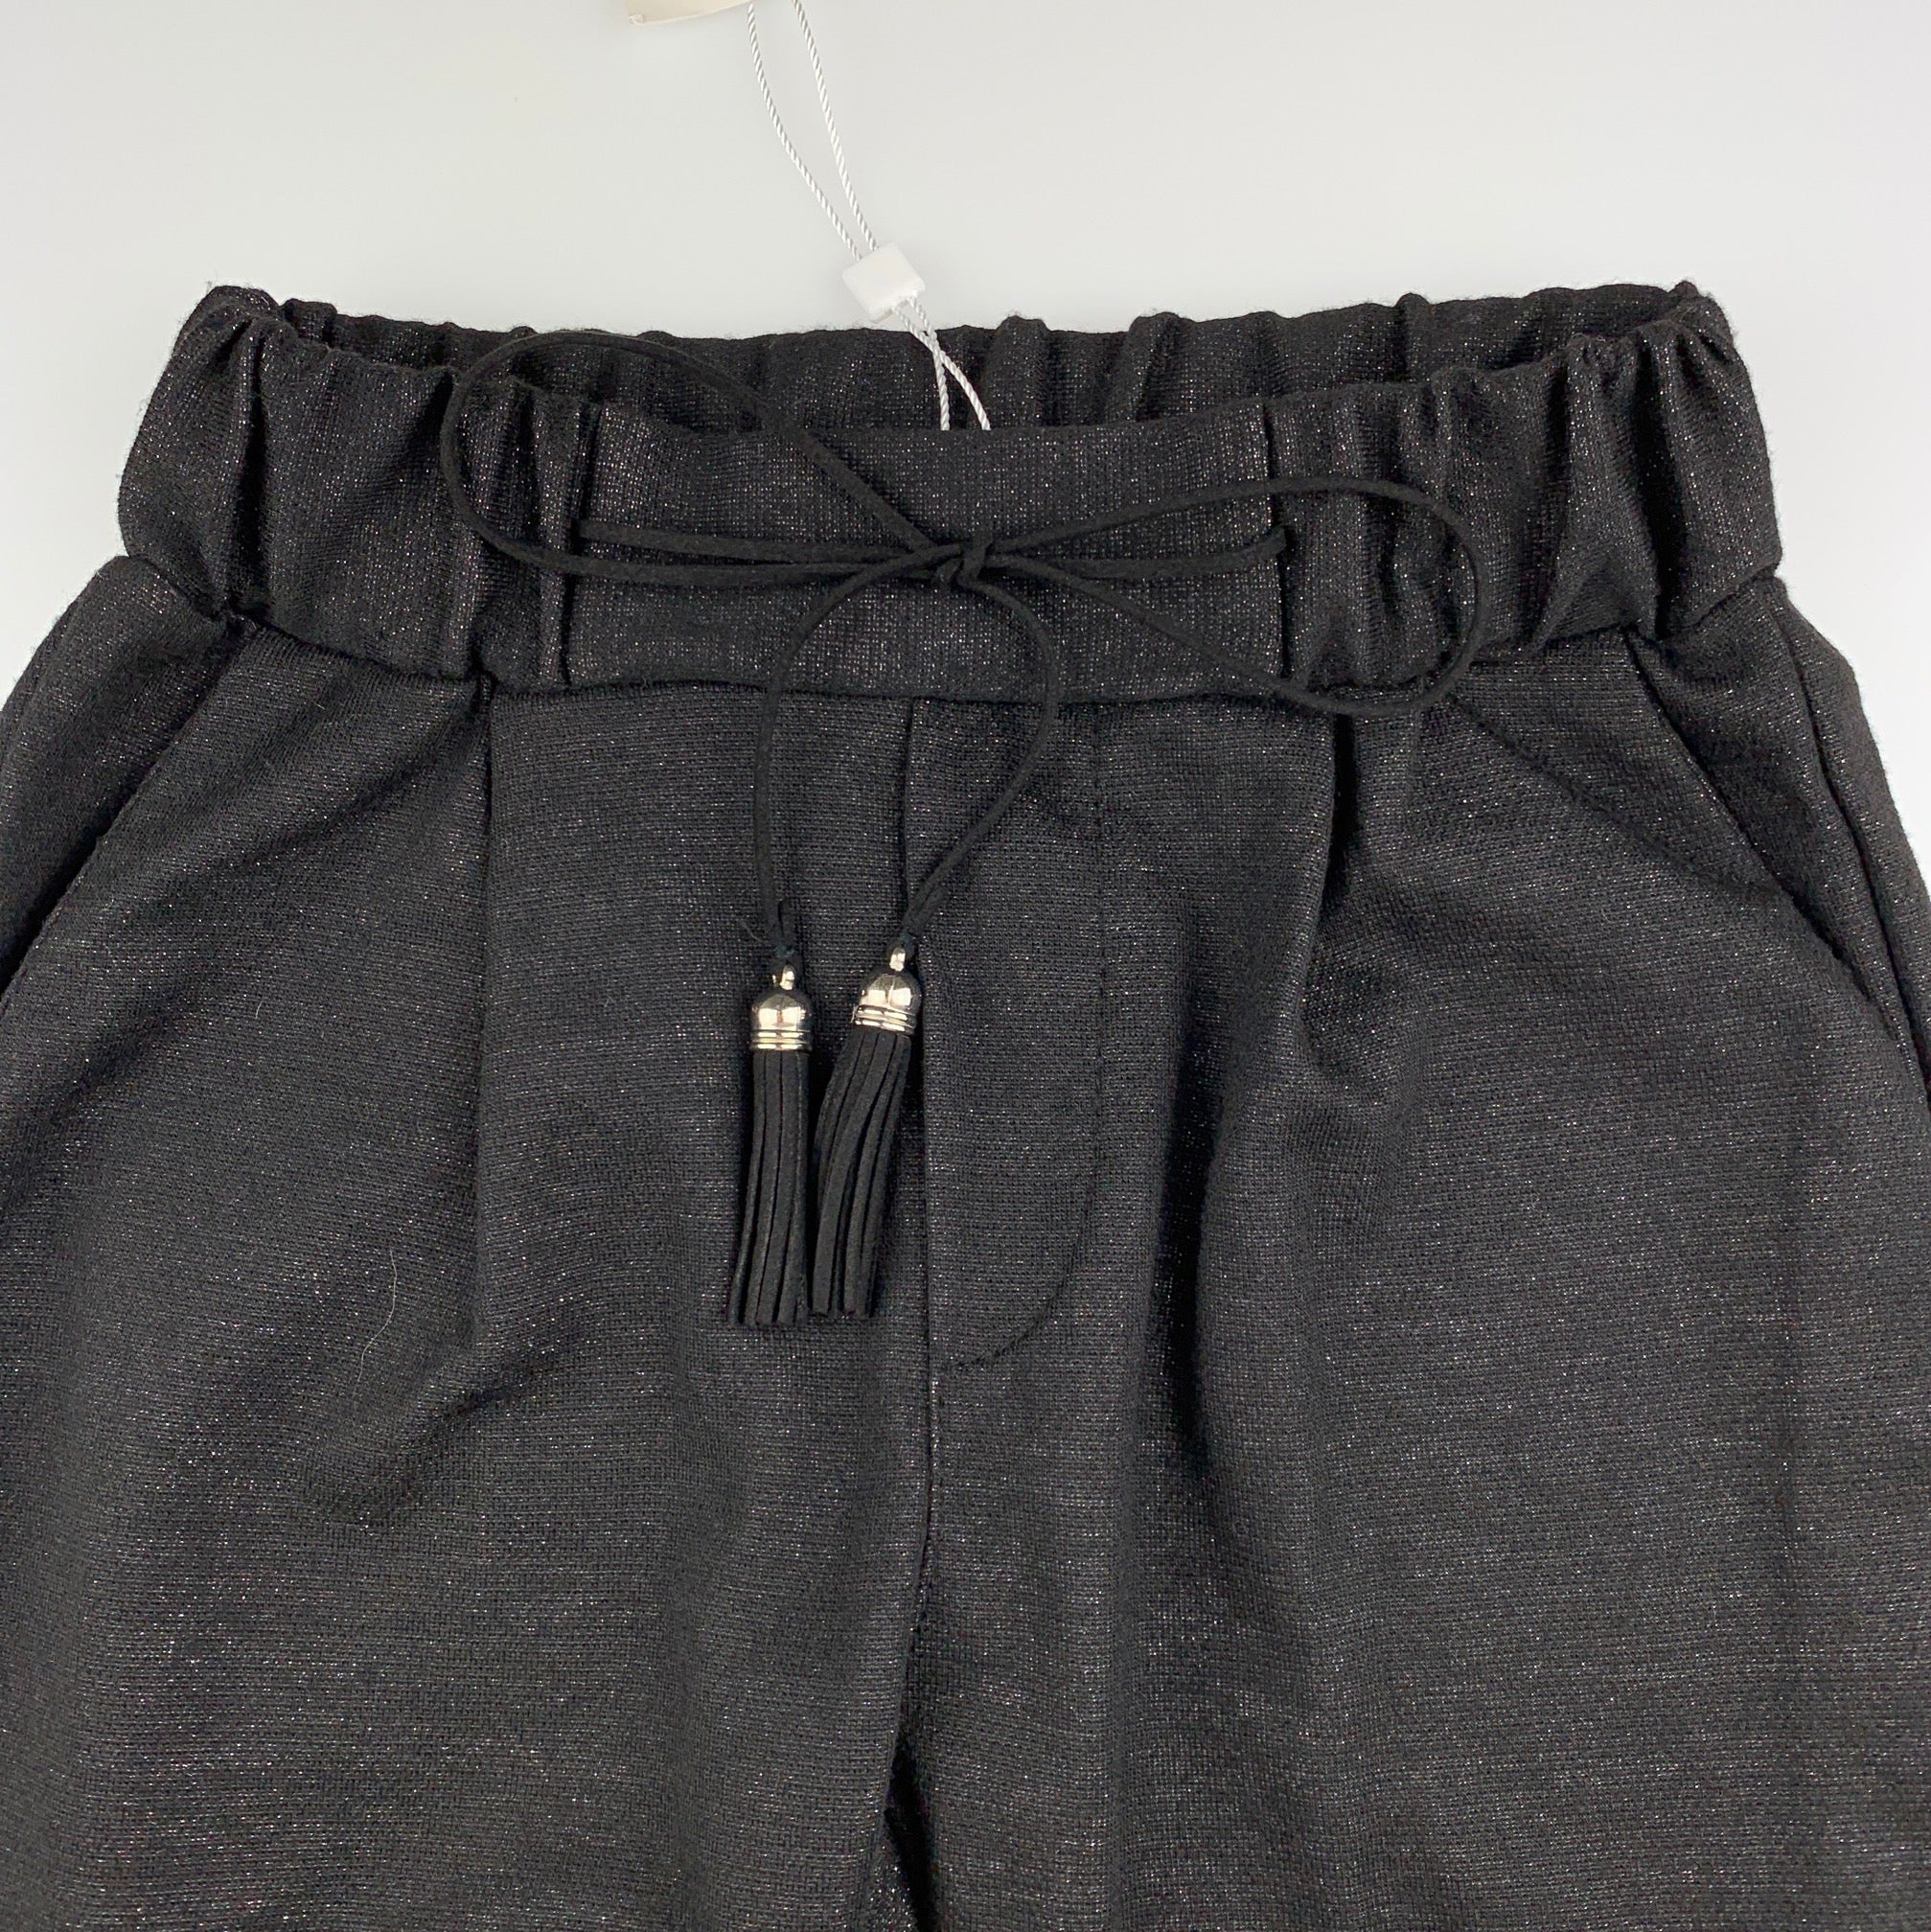 Piazza Italia, black & silver soft stretchy pants, elasticated